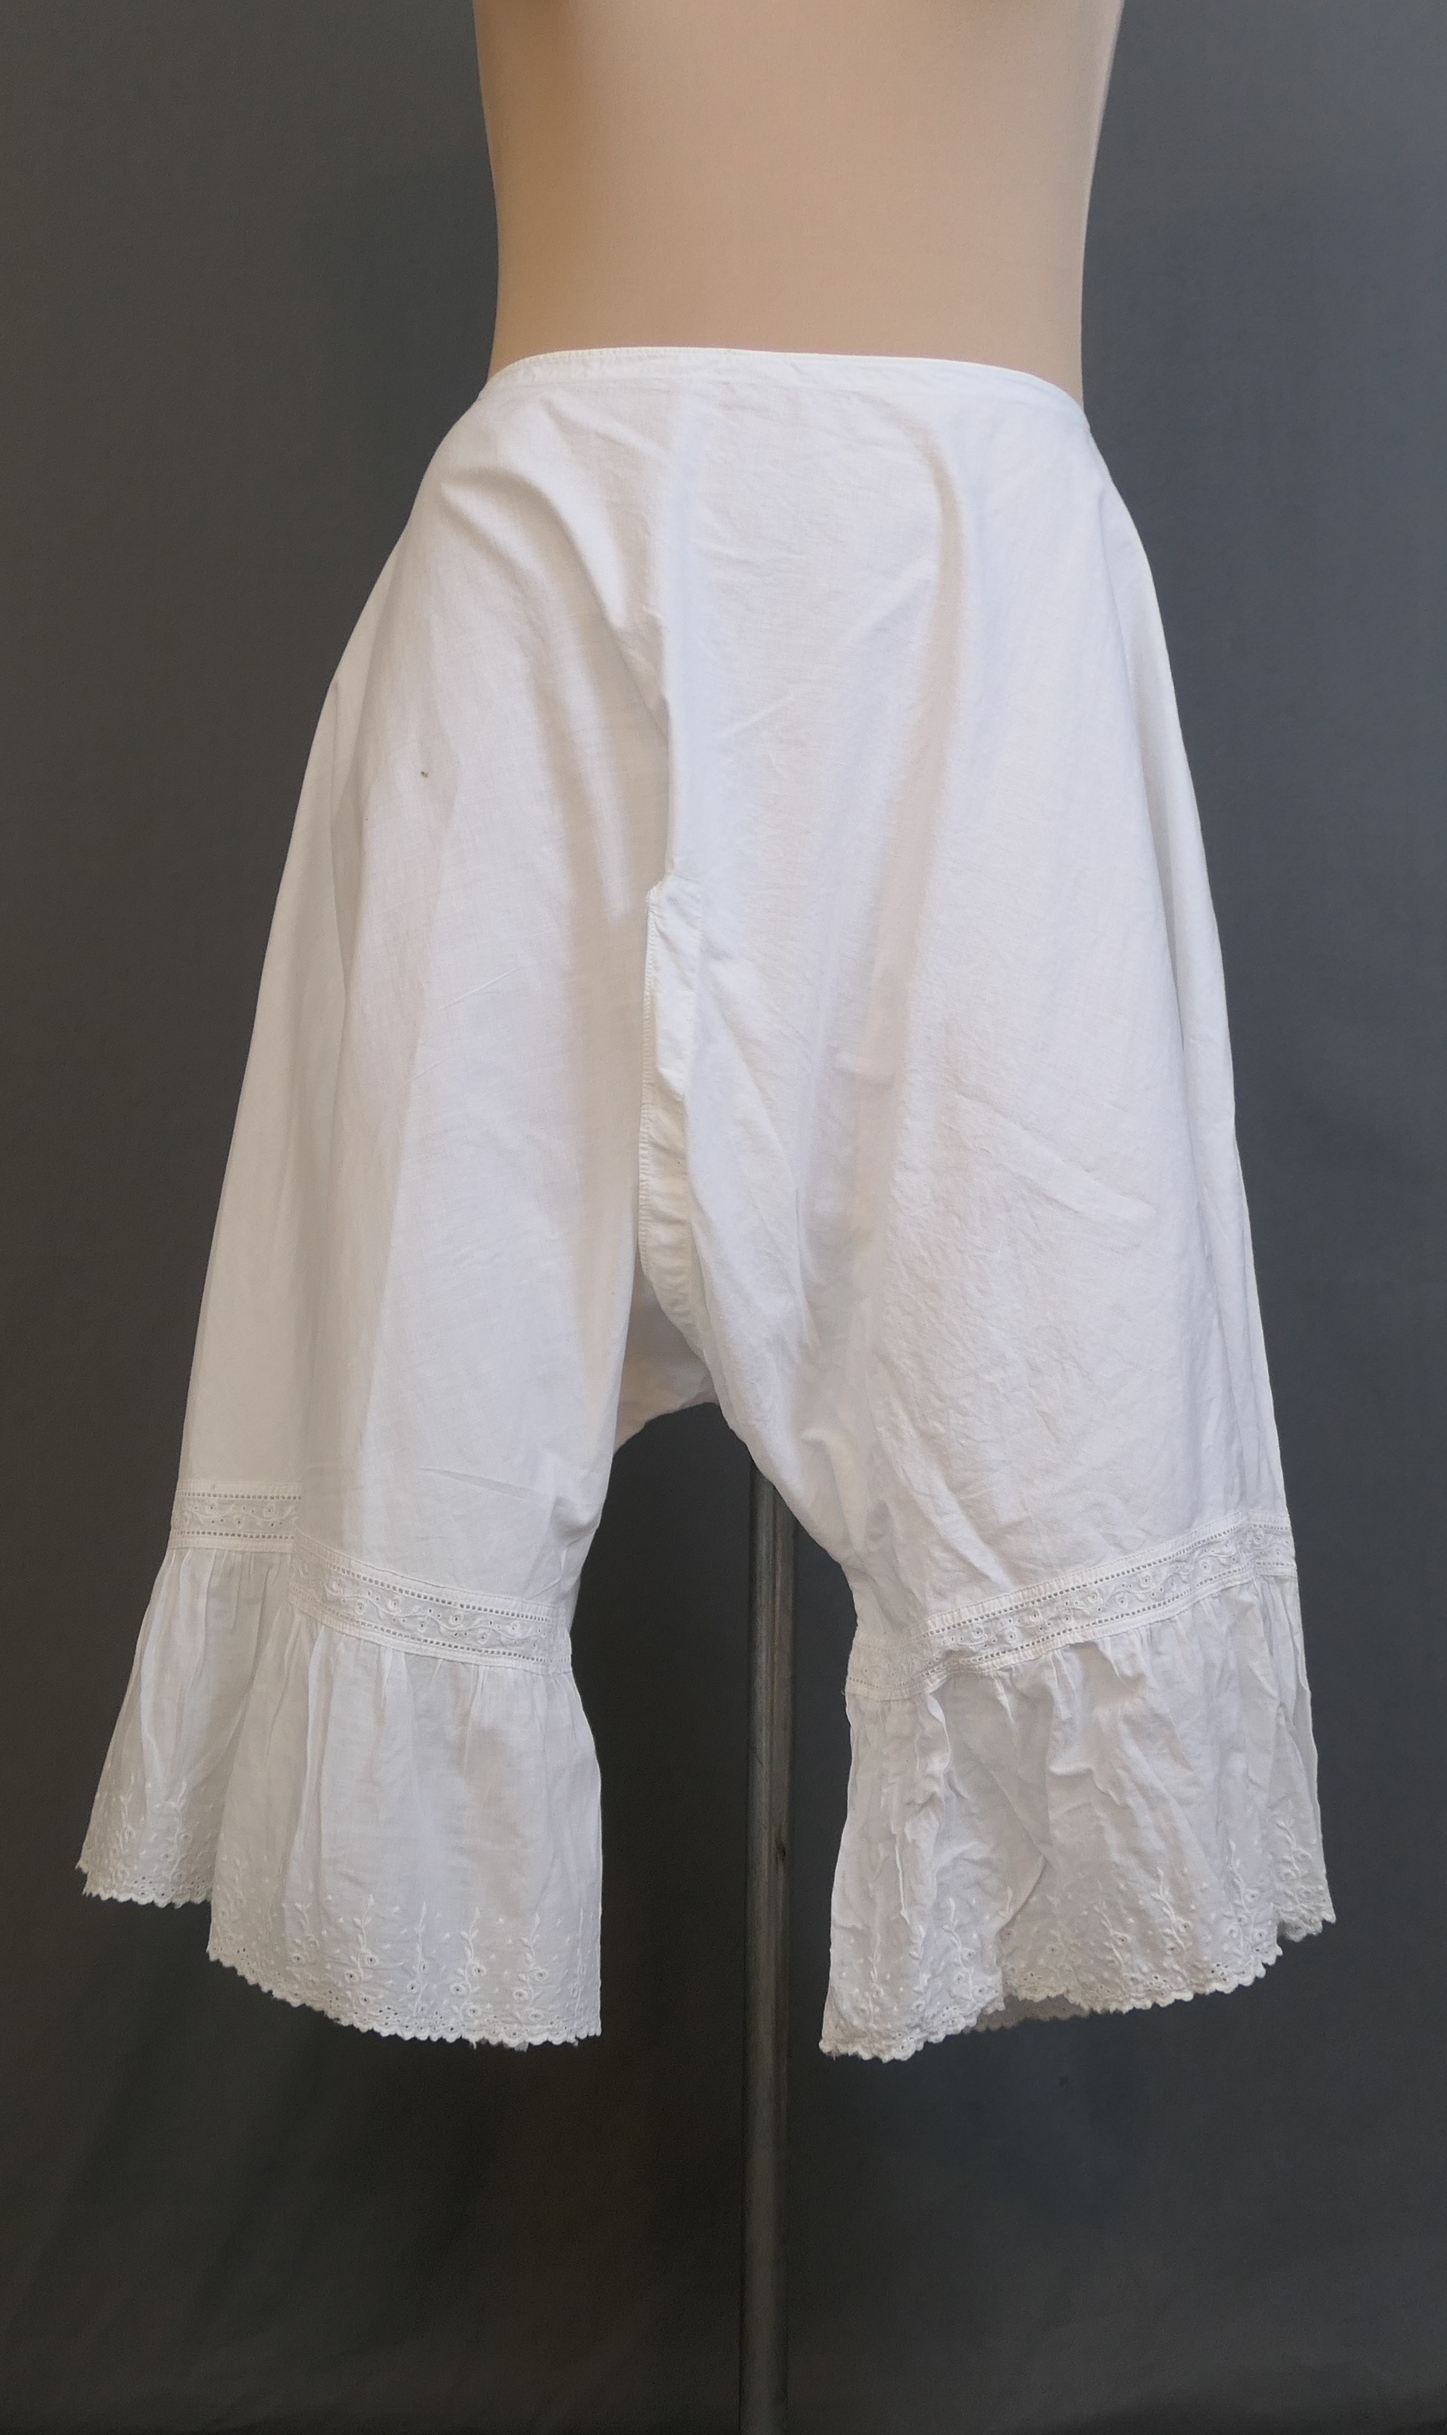 Victorian White Cotton Bloomers Antique Undergarments Vintage